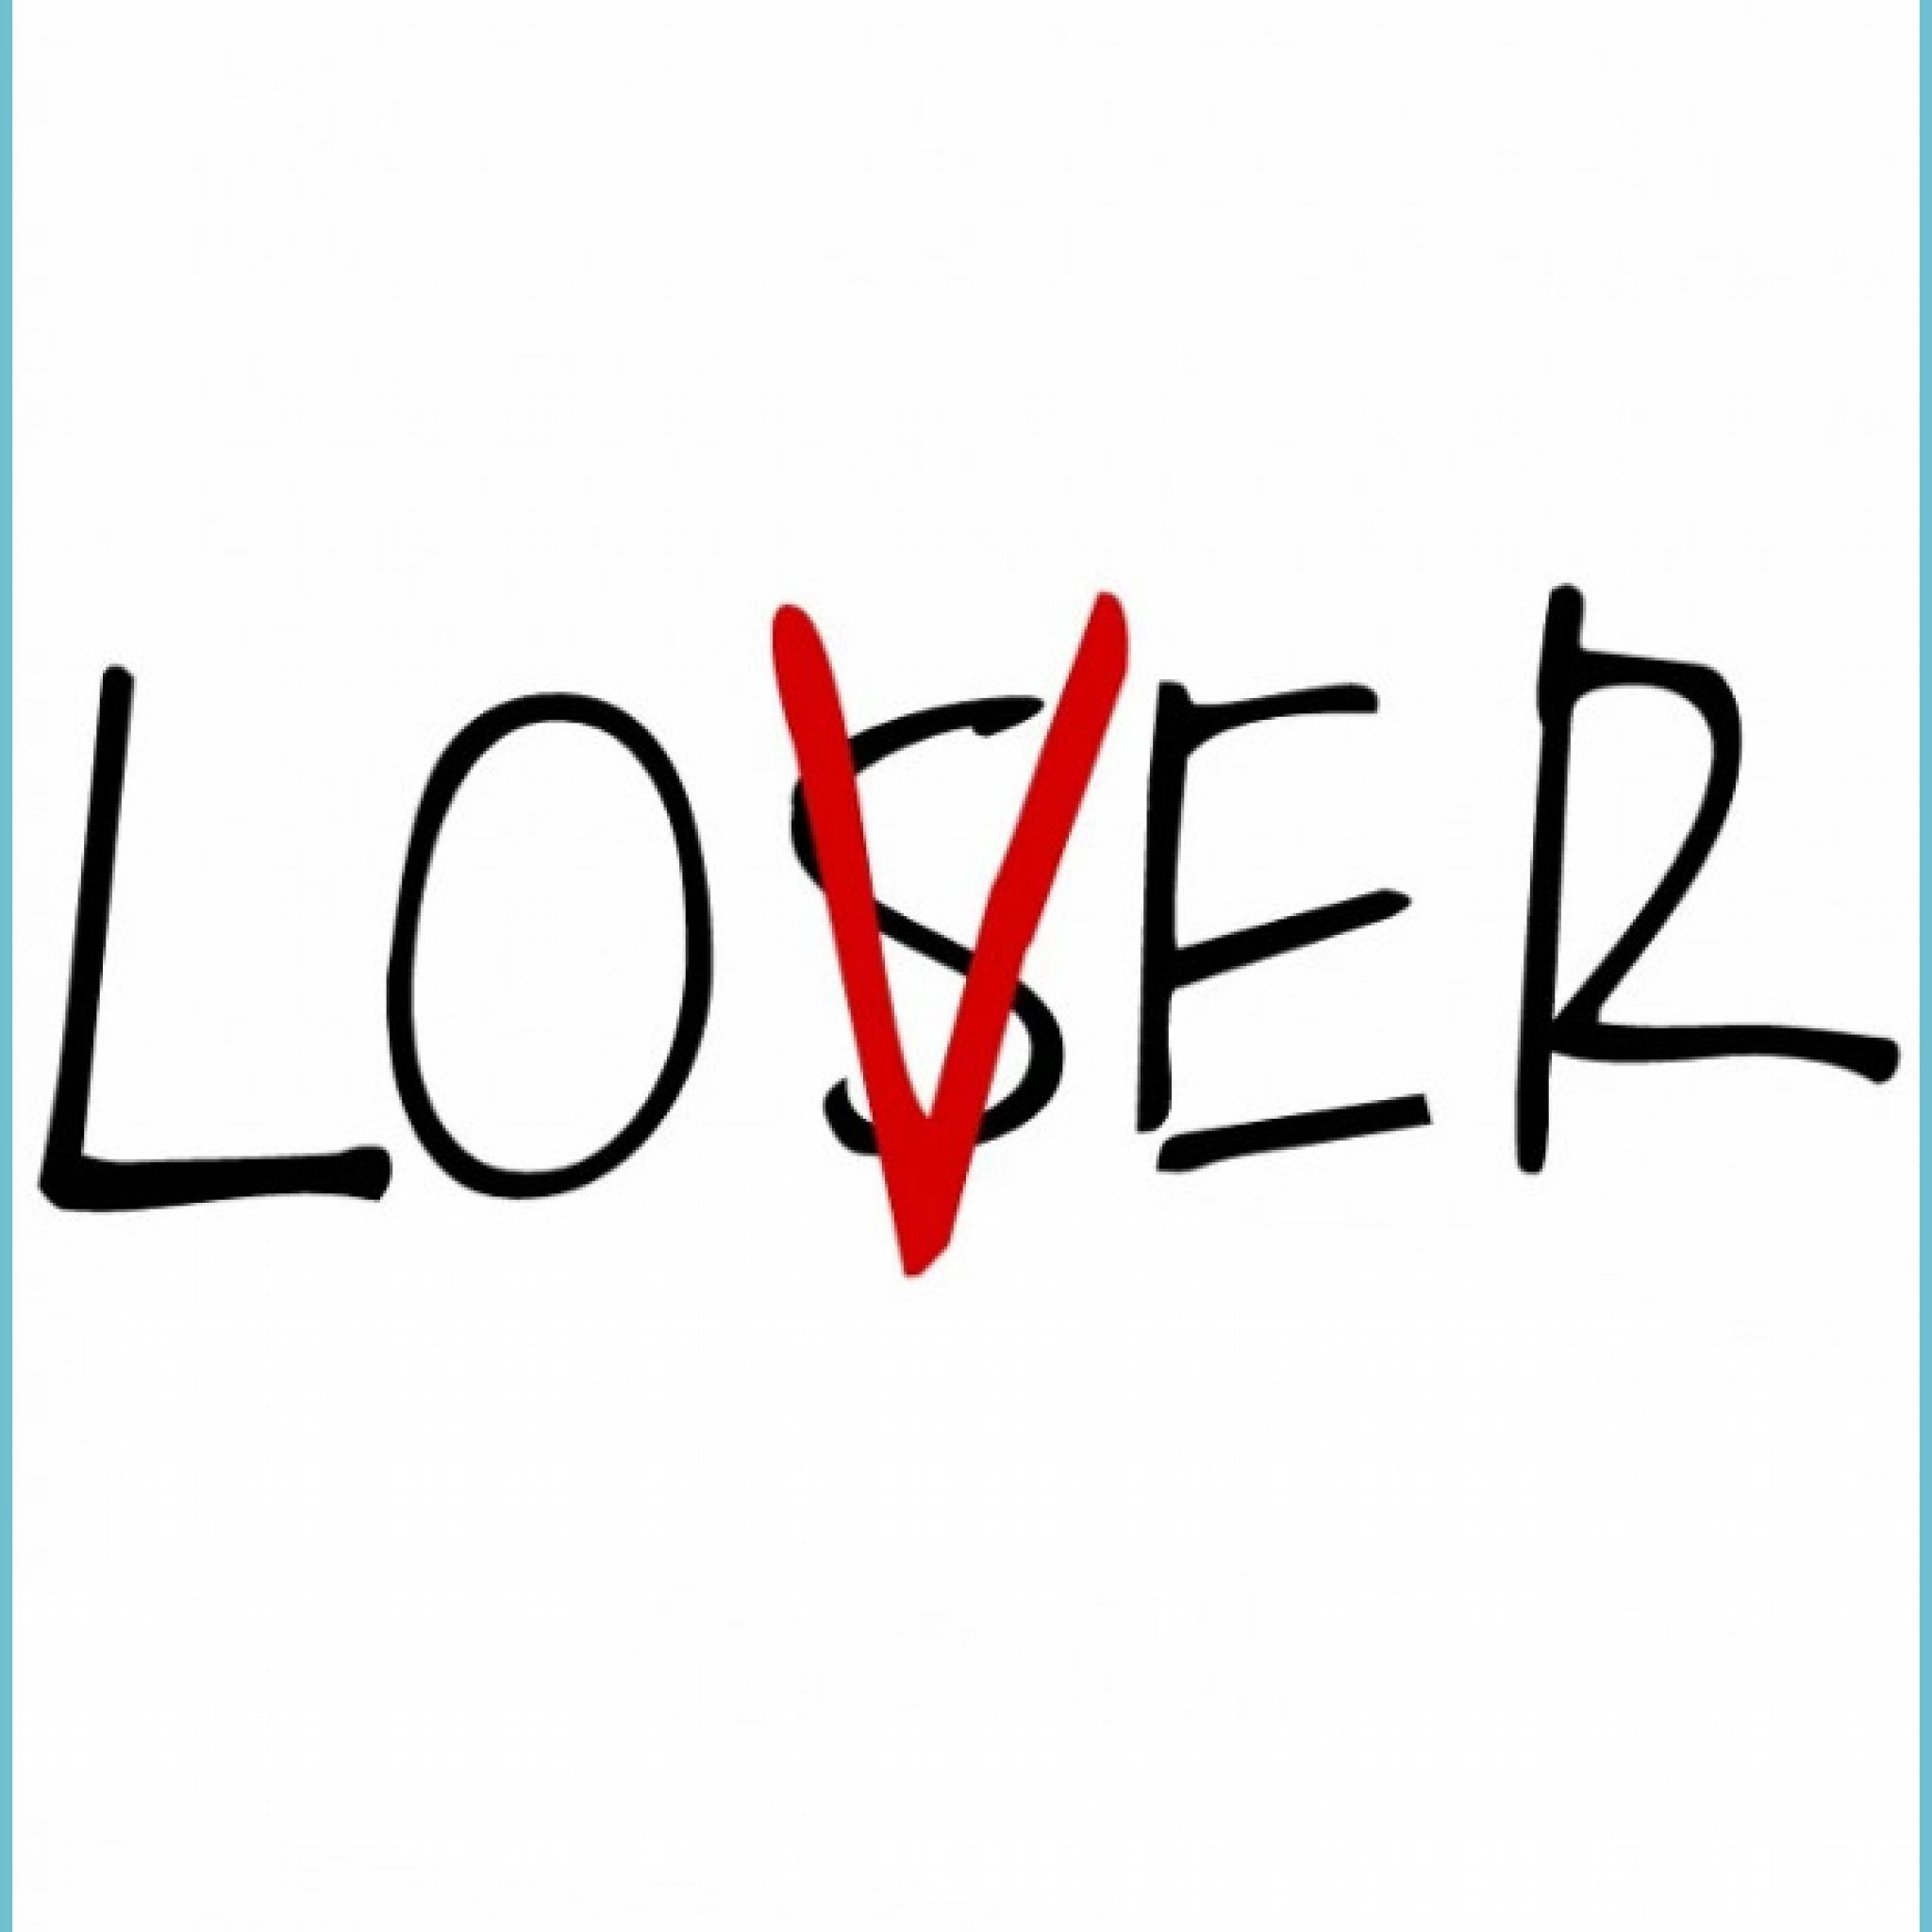 Lover Loser Wallpapers - Wallpaper Cave